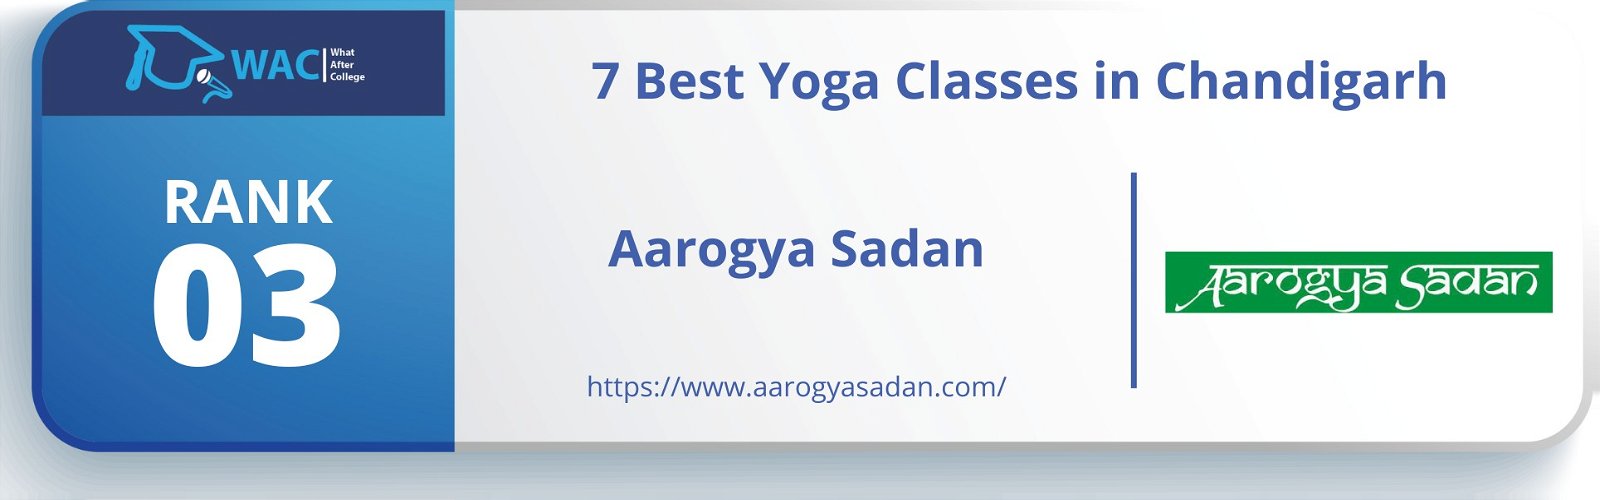 yoga classes in chandigarh